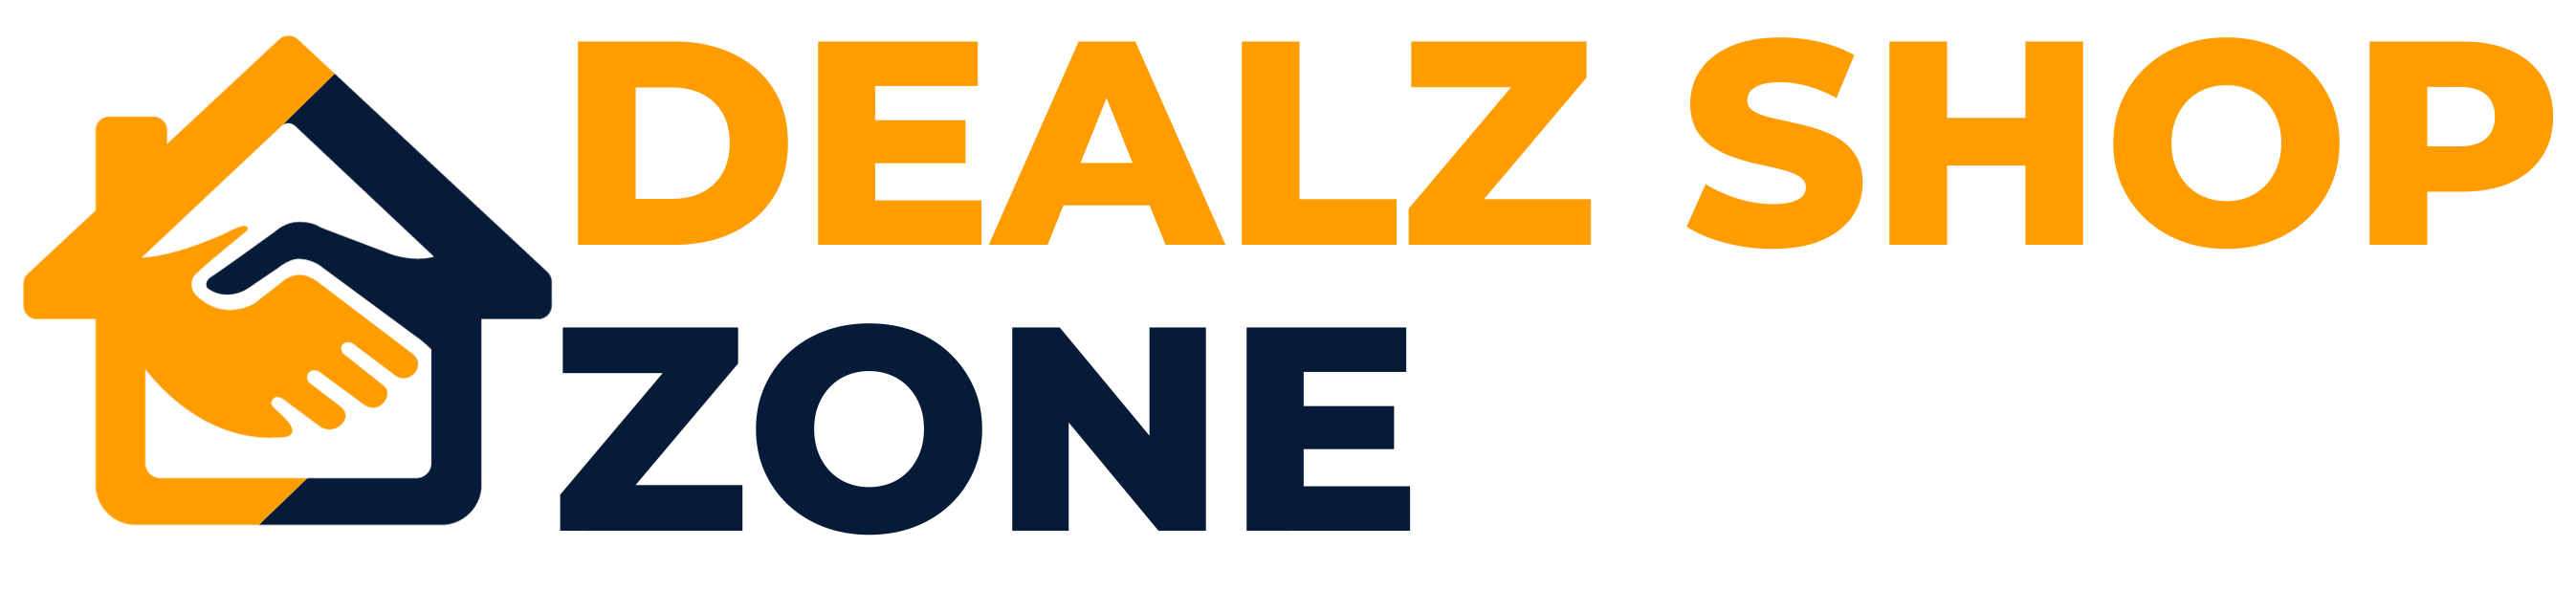 Dealz Shop Zone